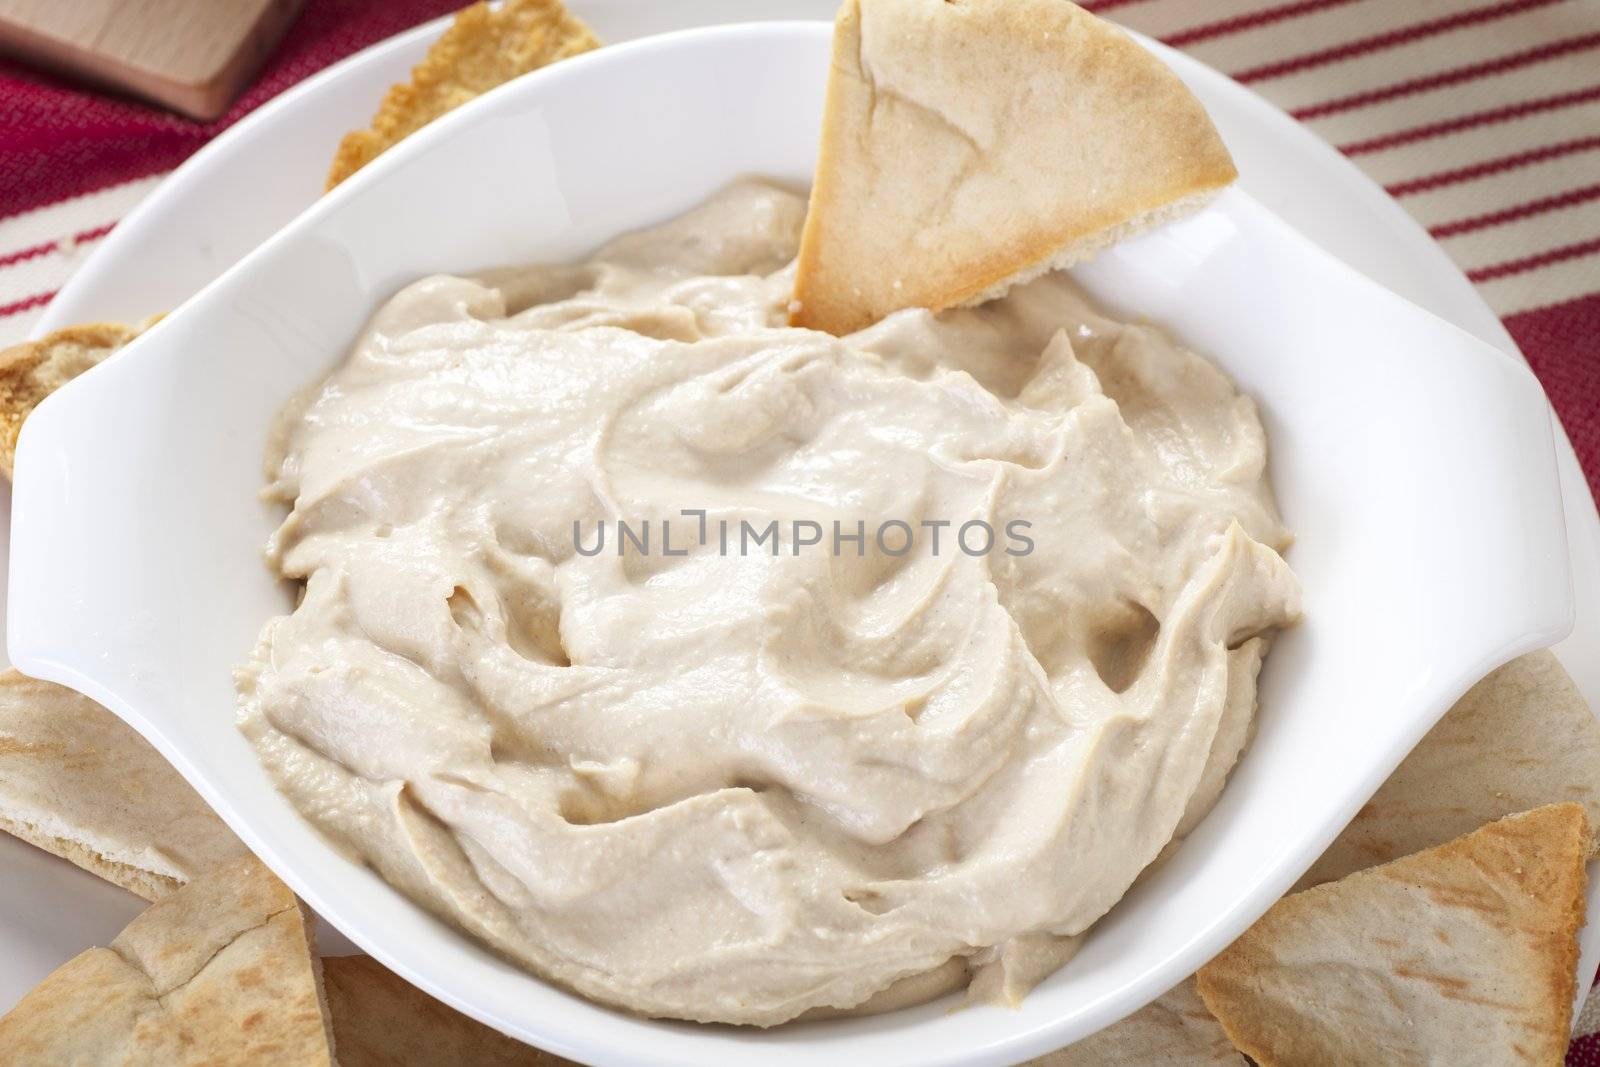 Hummus plate with pita bread.